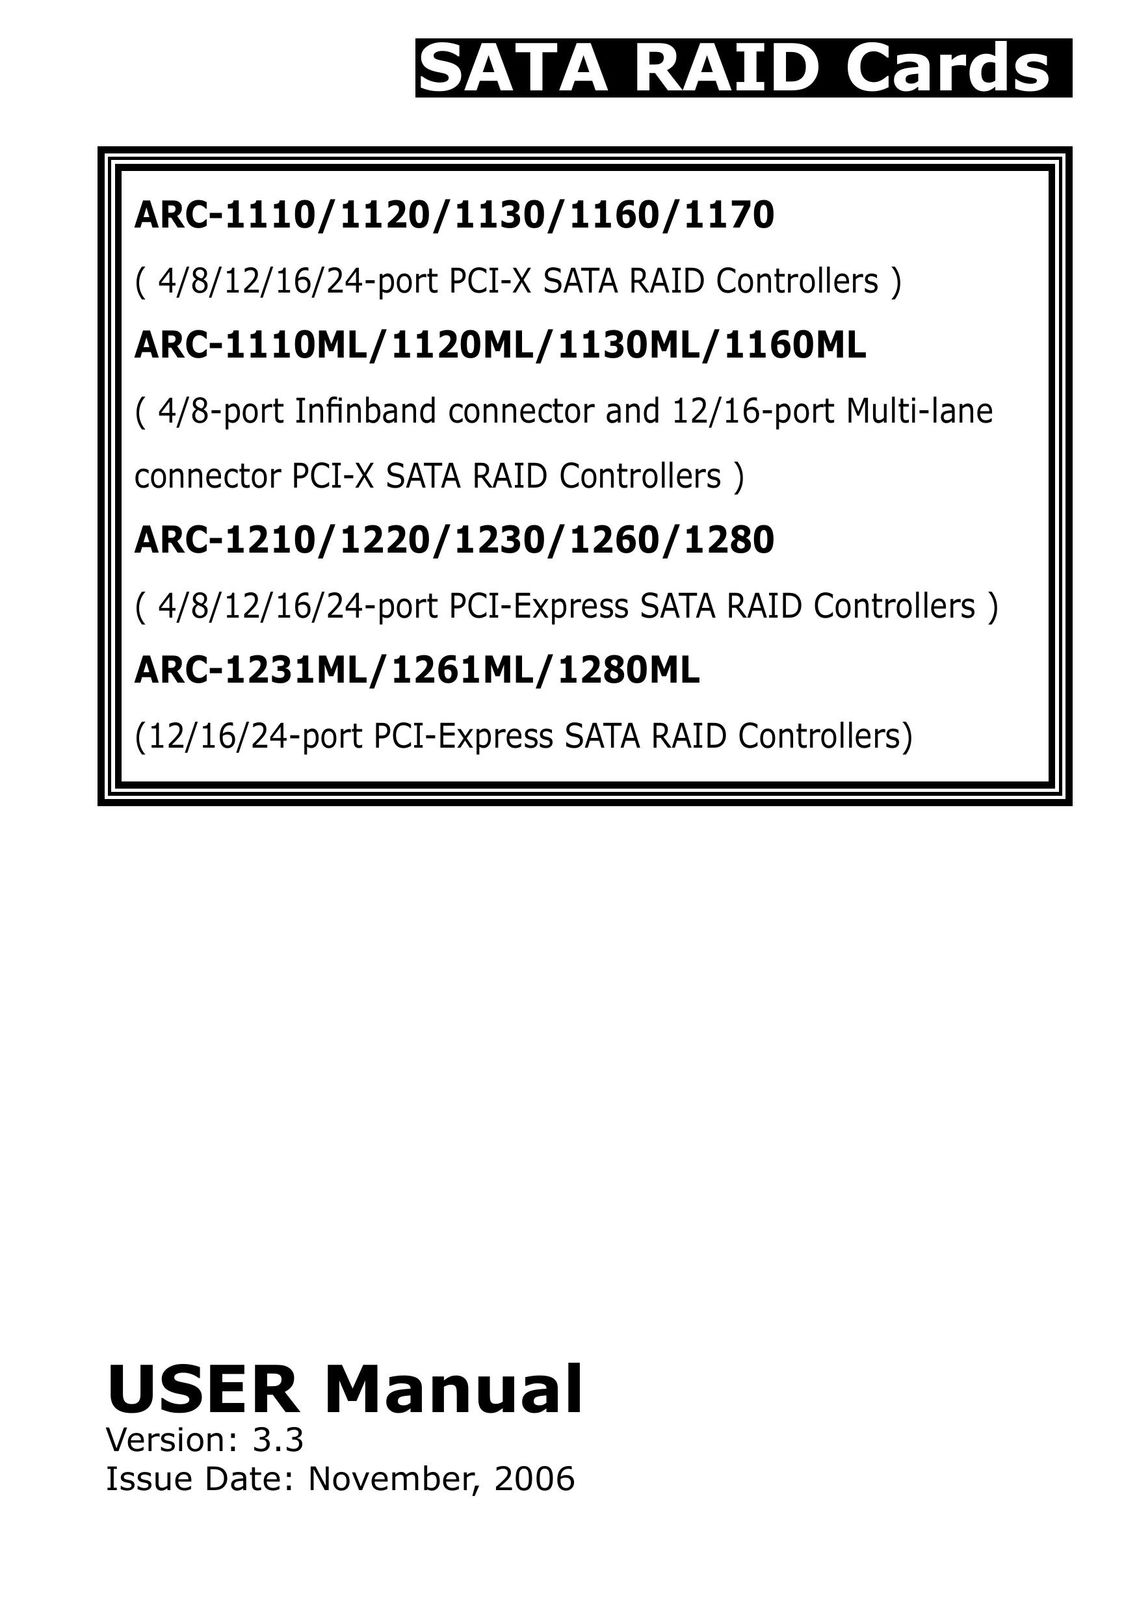 Areca ARC-1231ML/1261ML/1280ML Computer Hardware User Manual